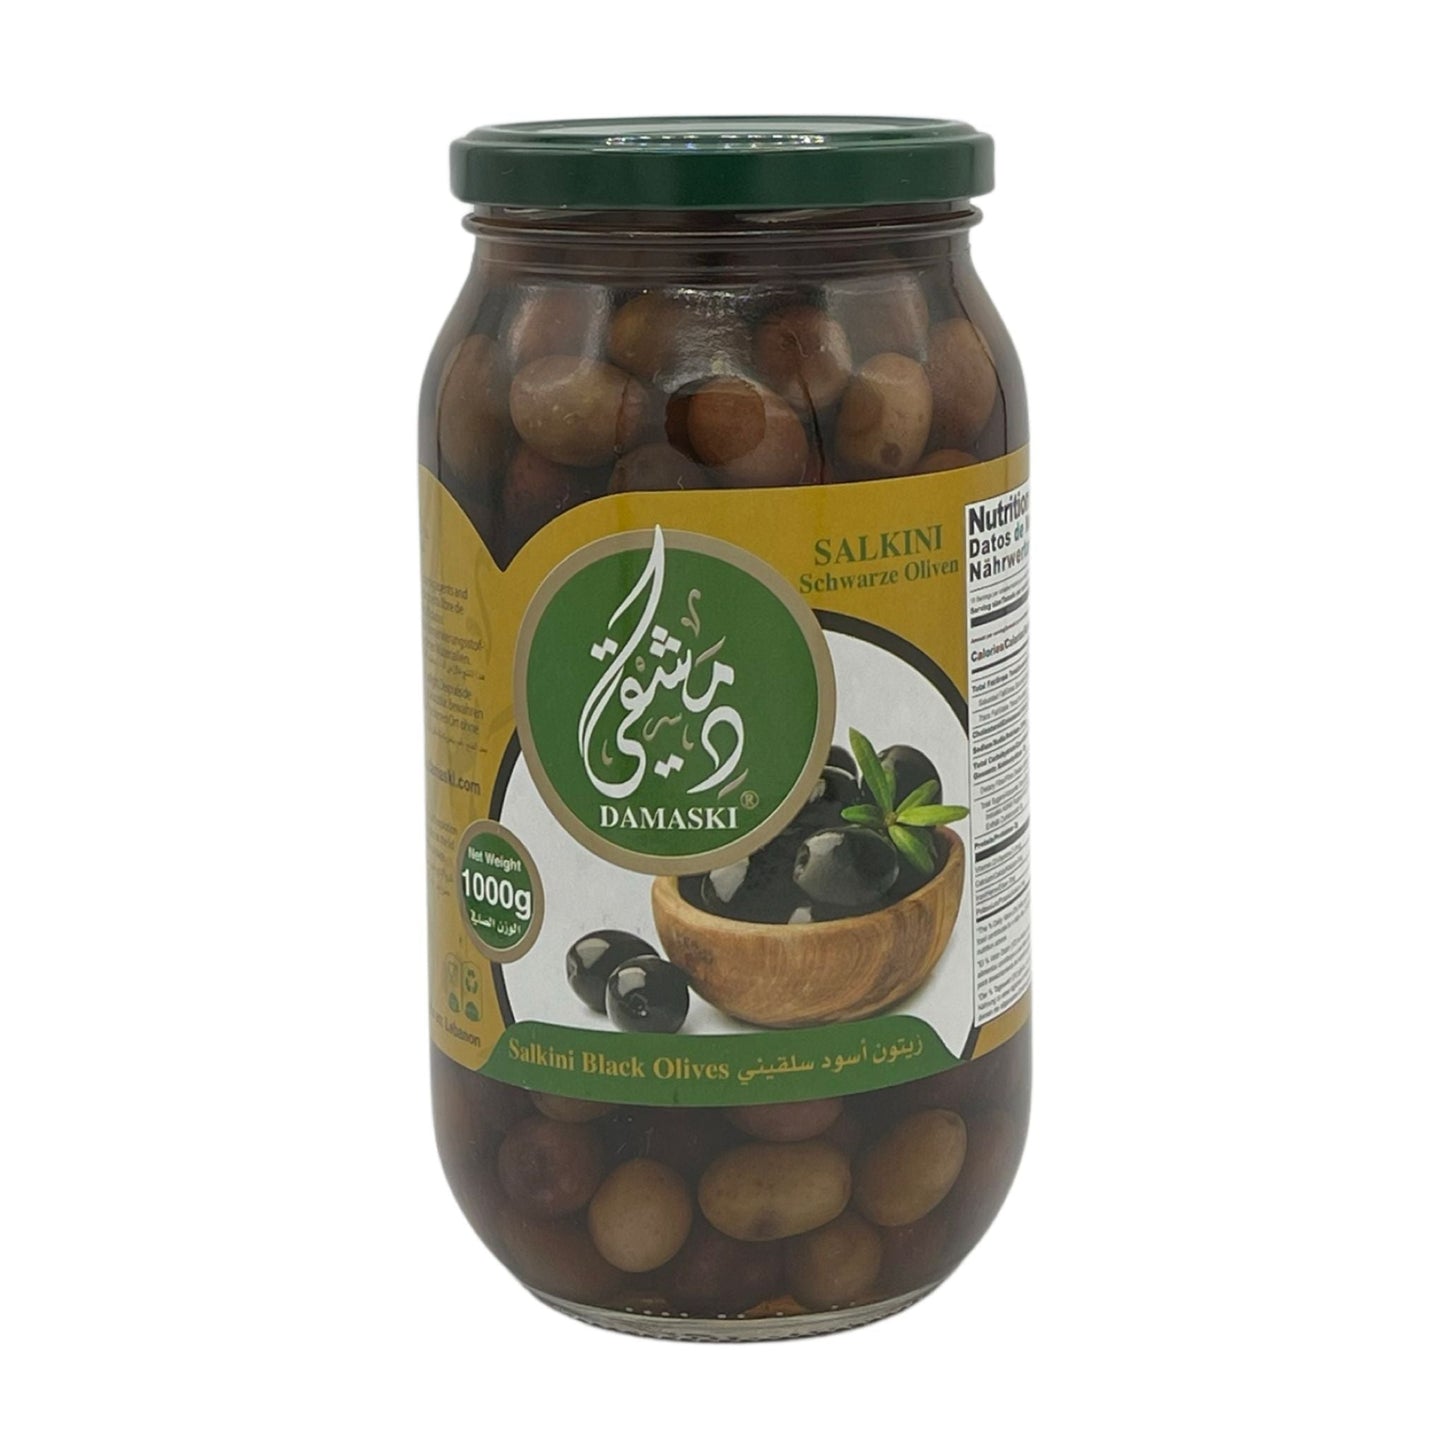 Damaski Black Olive Salkini 1000g